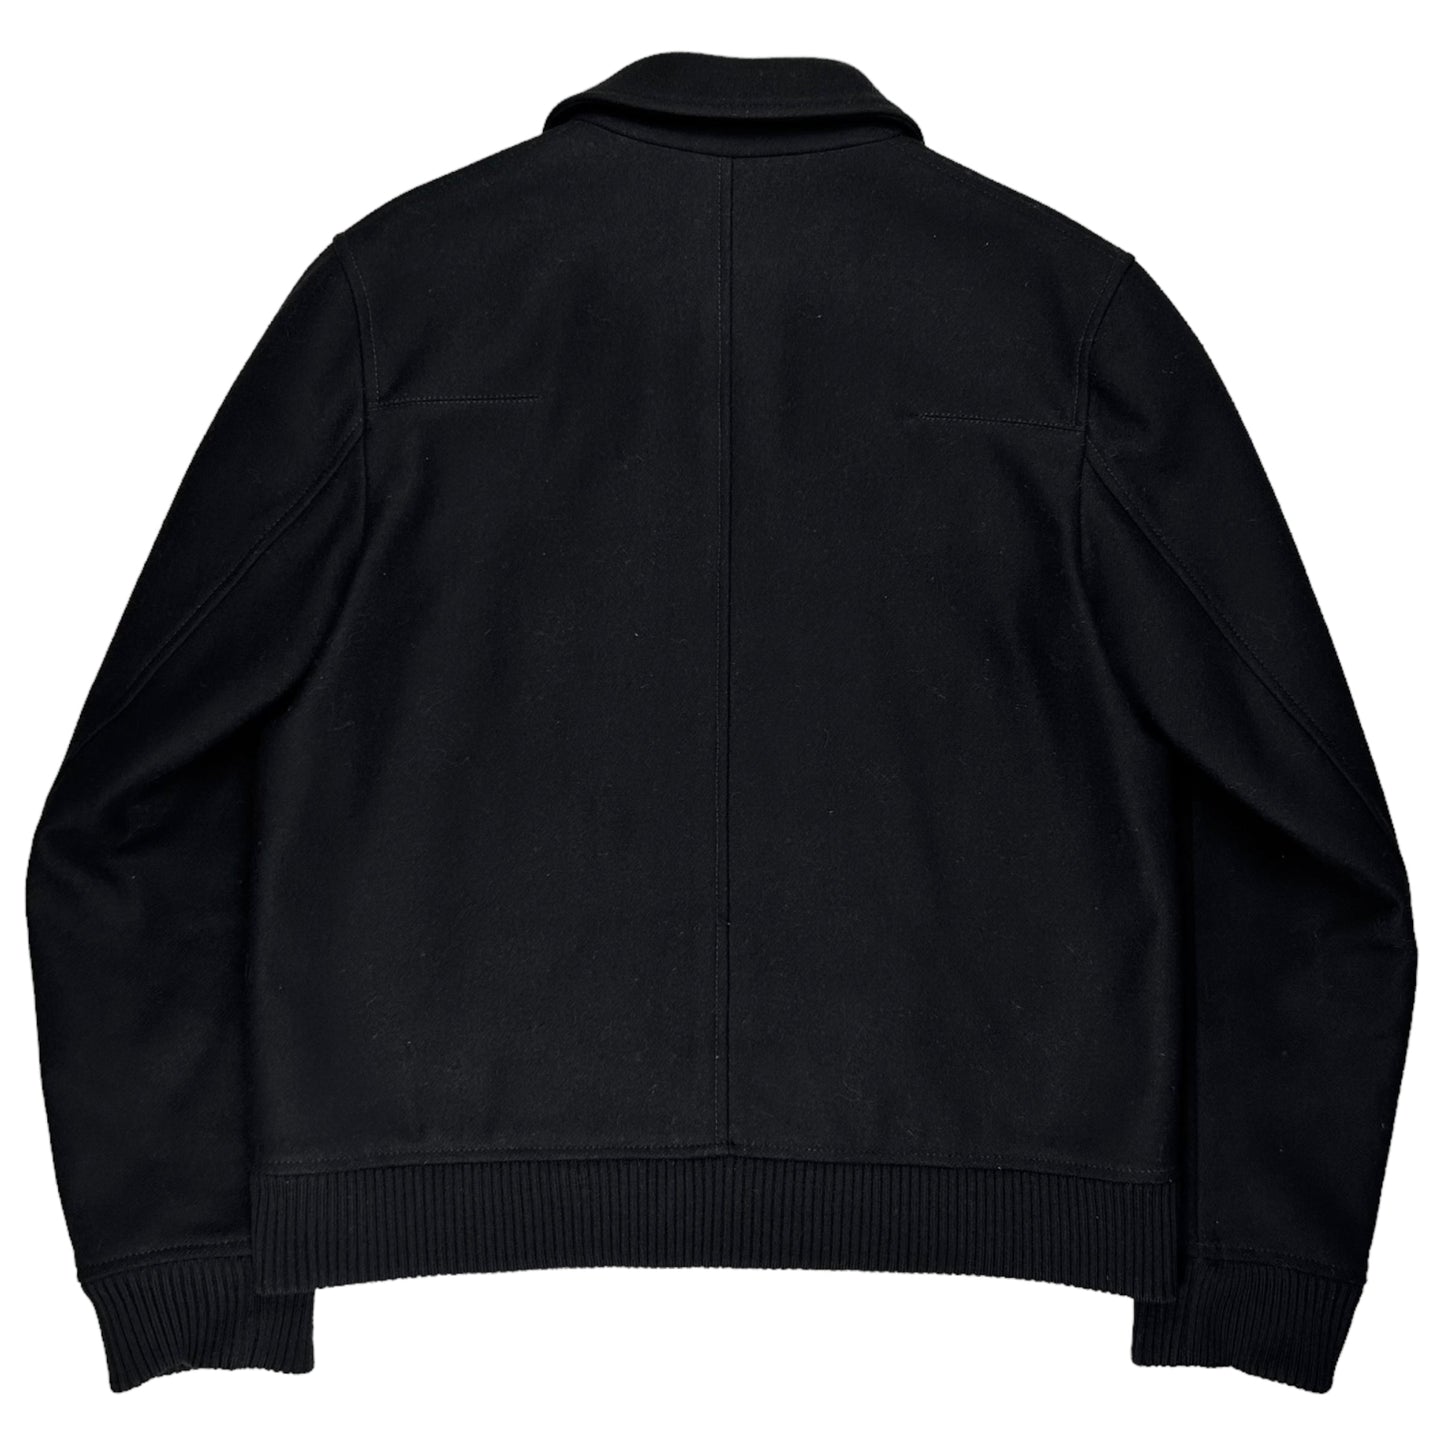 Dior Homme Snap Button Biker Wool Jacket - AW10